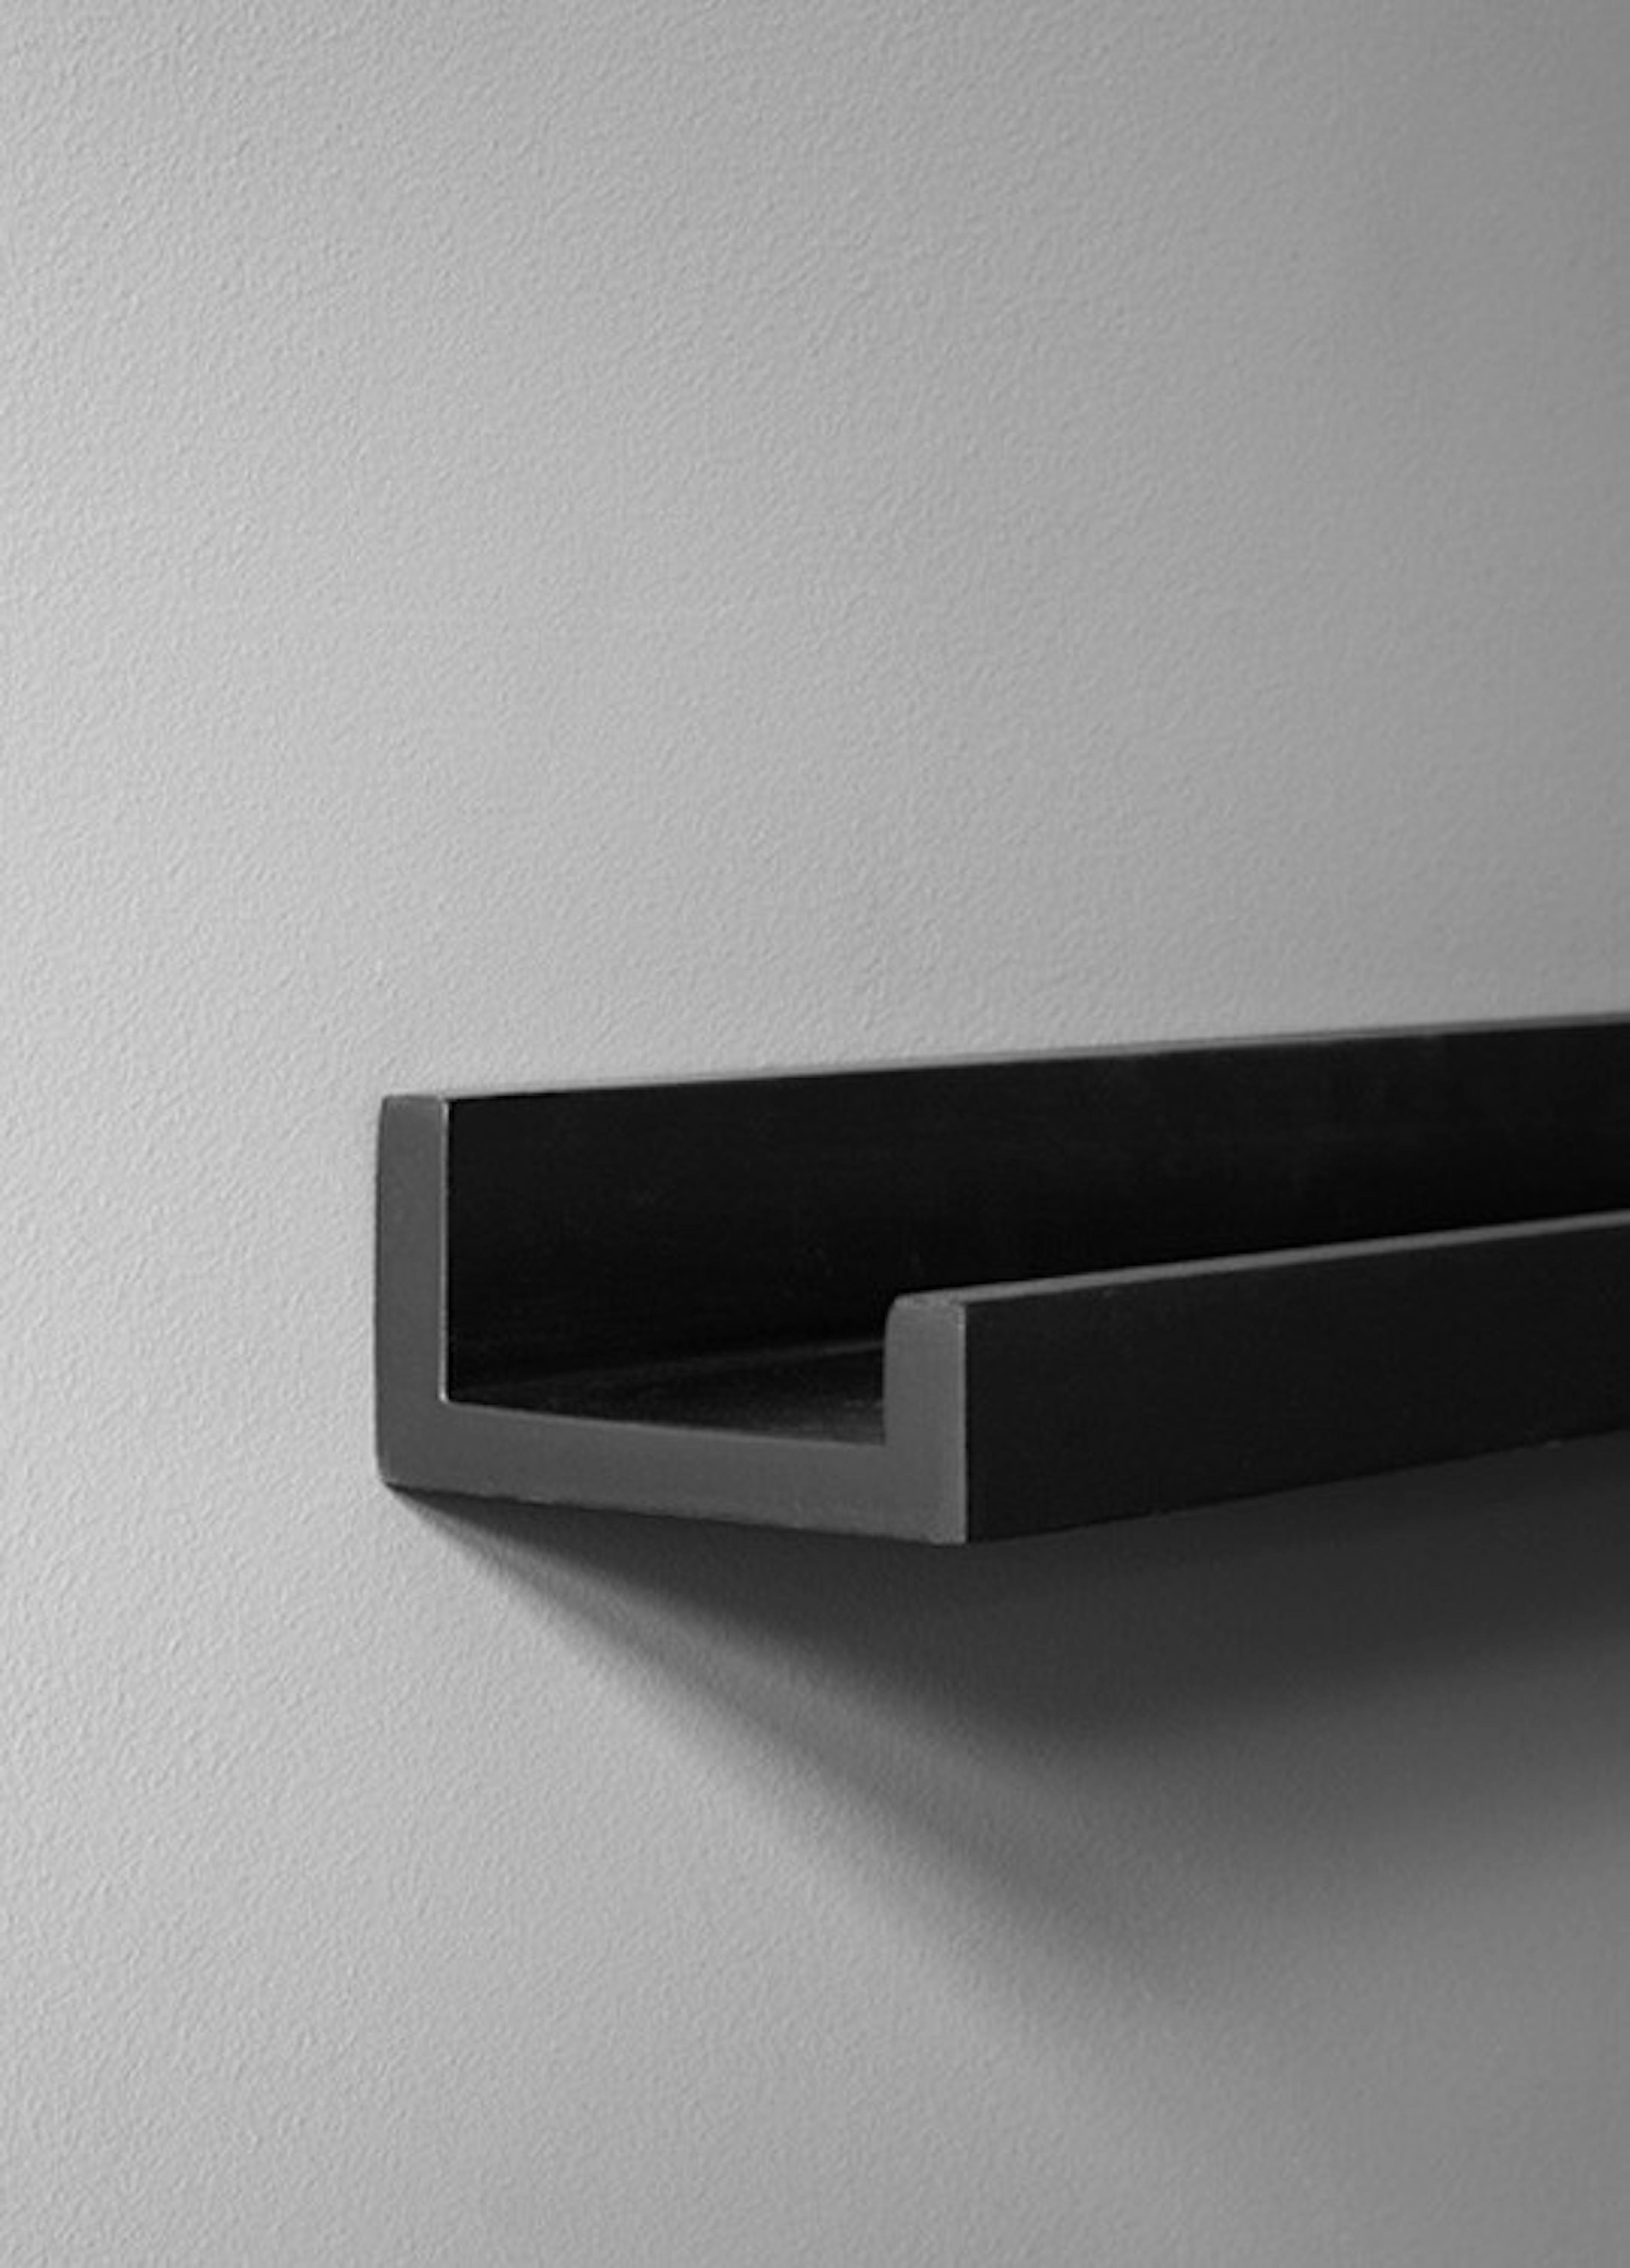 Black picture ledge (70cm - 28in)